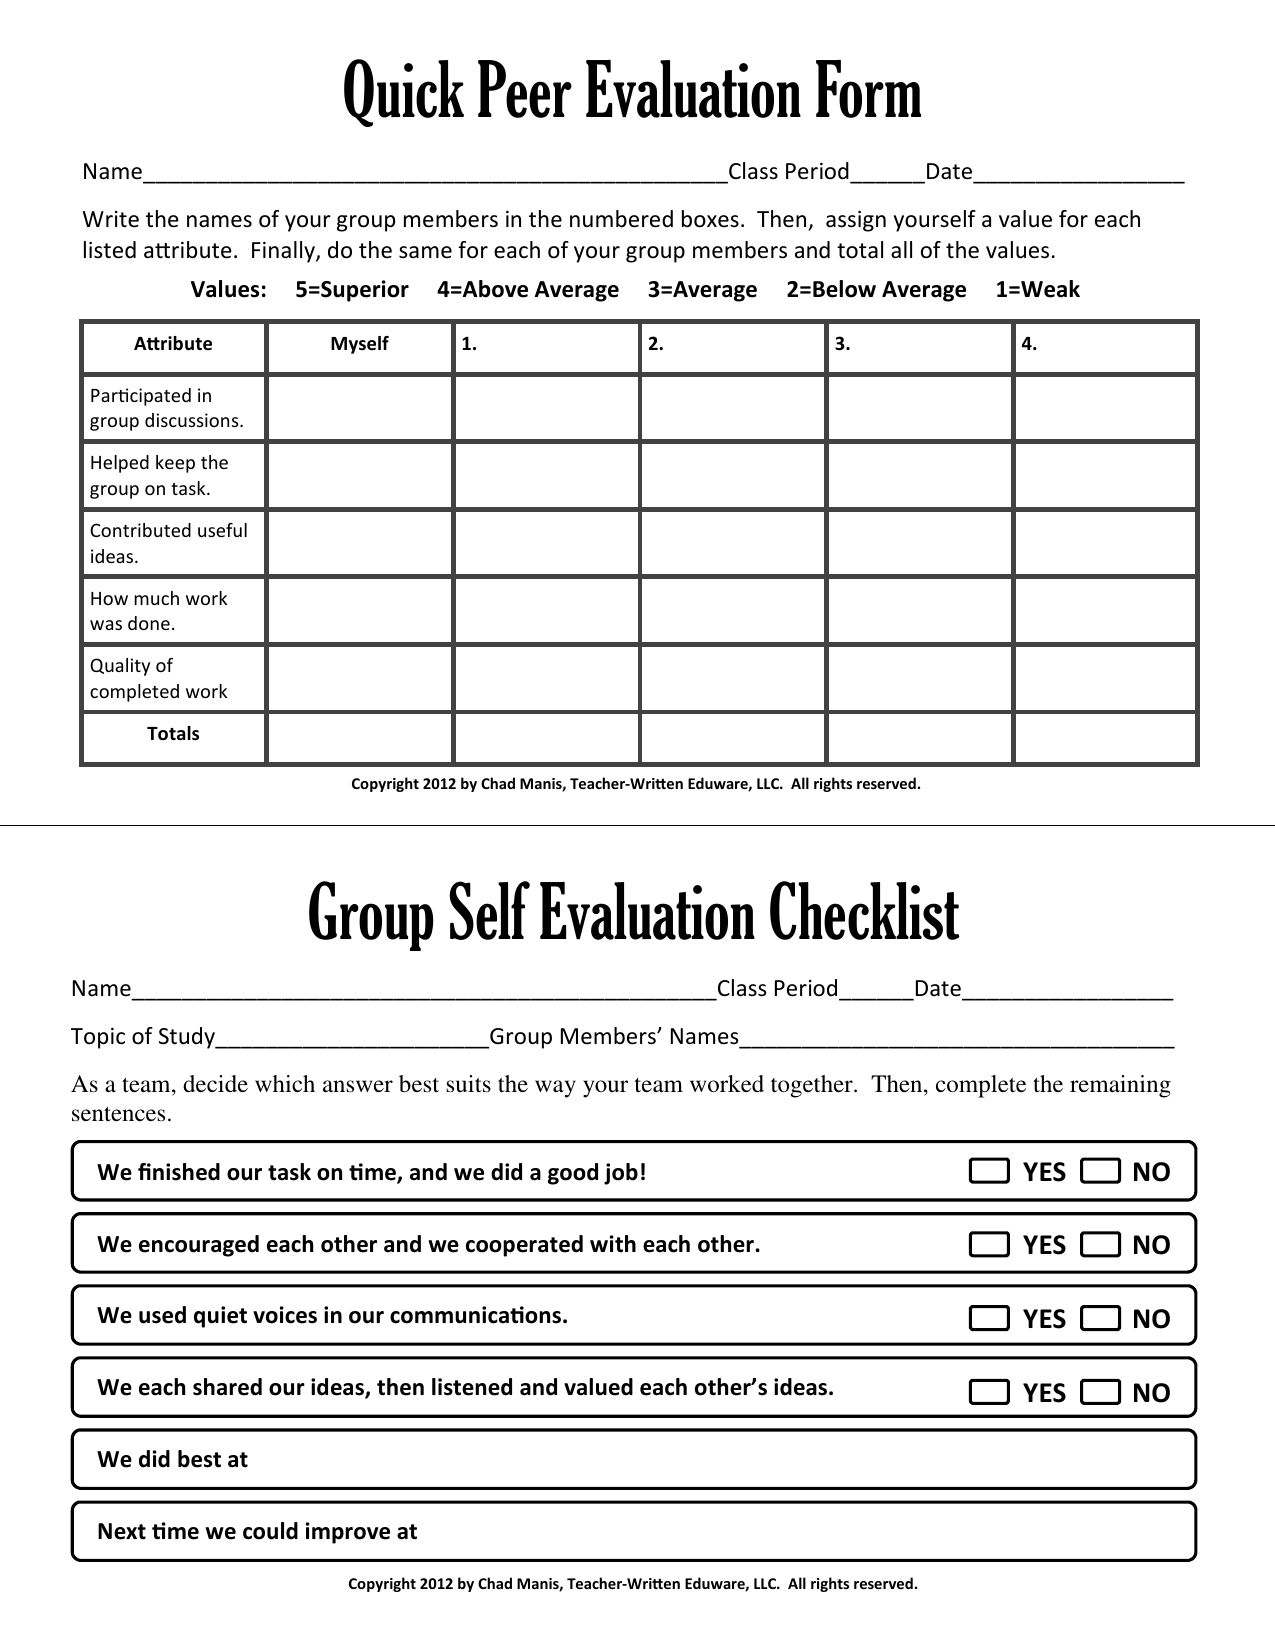 student self assessment form